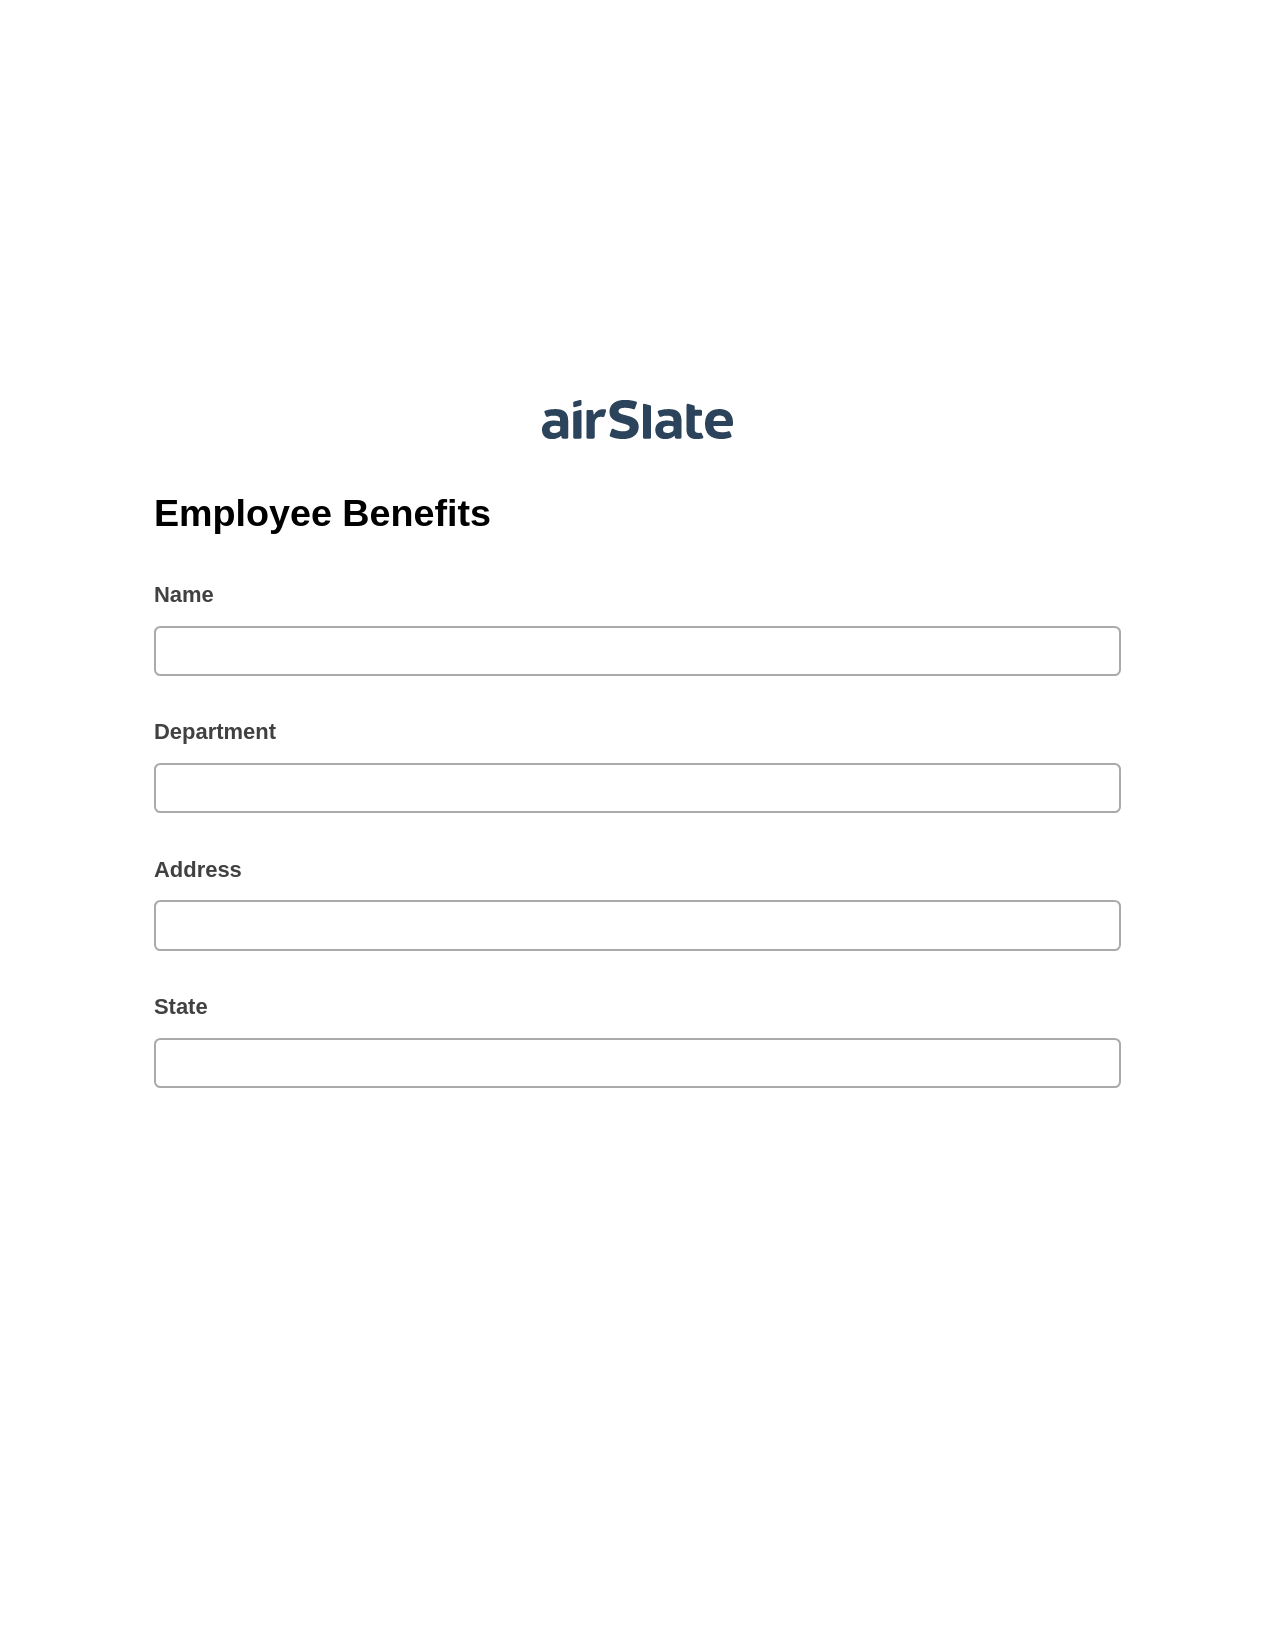 Employee Benefits Pre-fill from Excel Spreadsheet Bot, Hide Signatures Bot, Export to Smartsheet